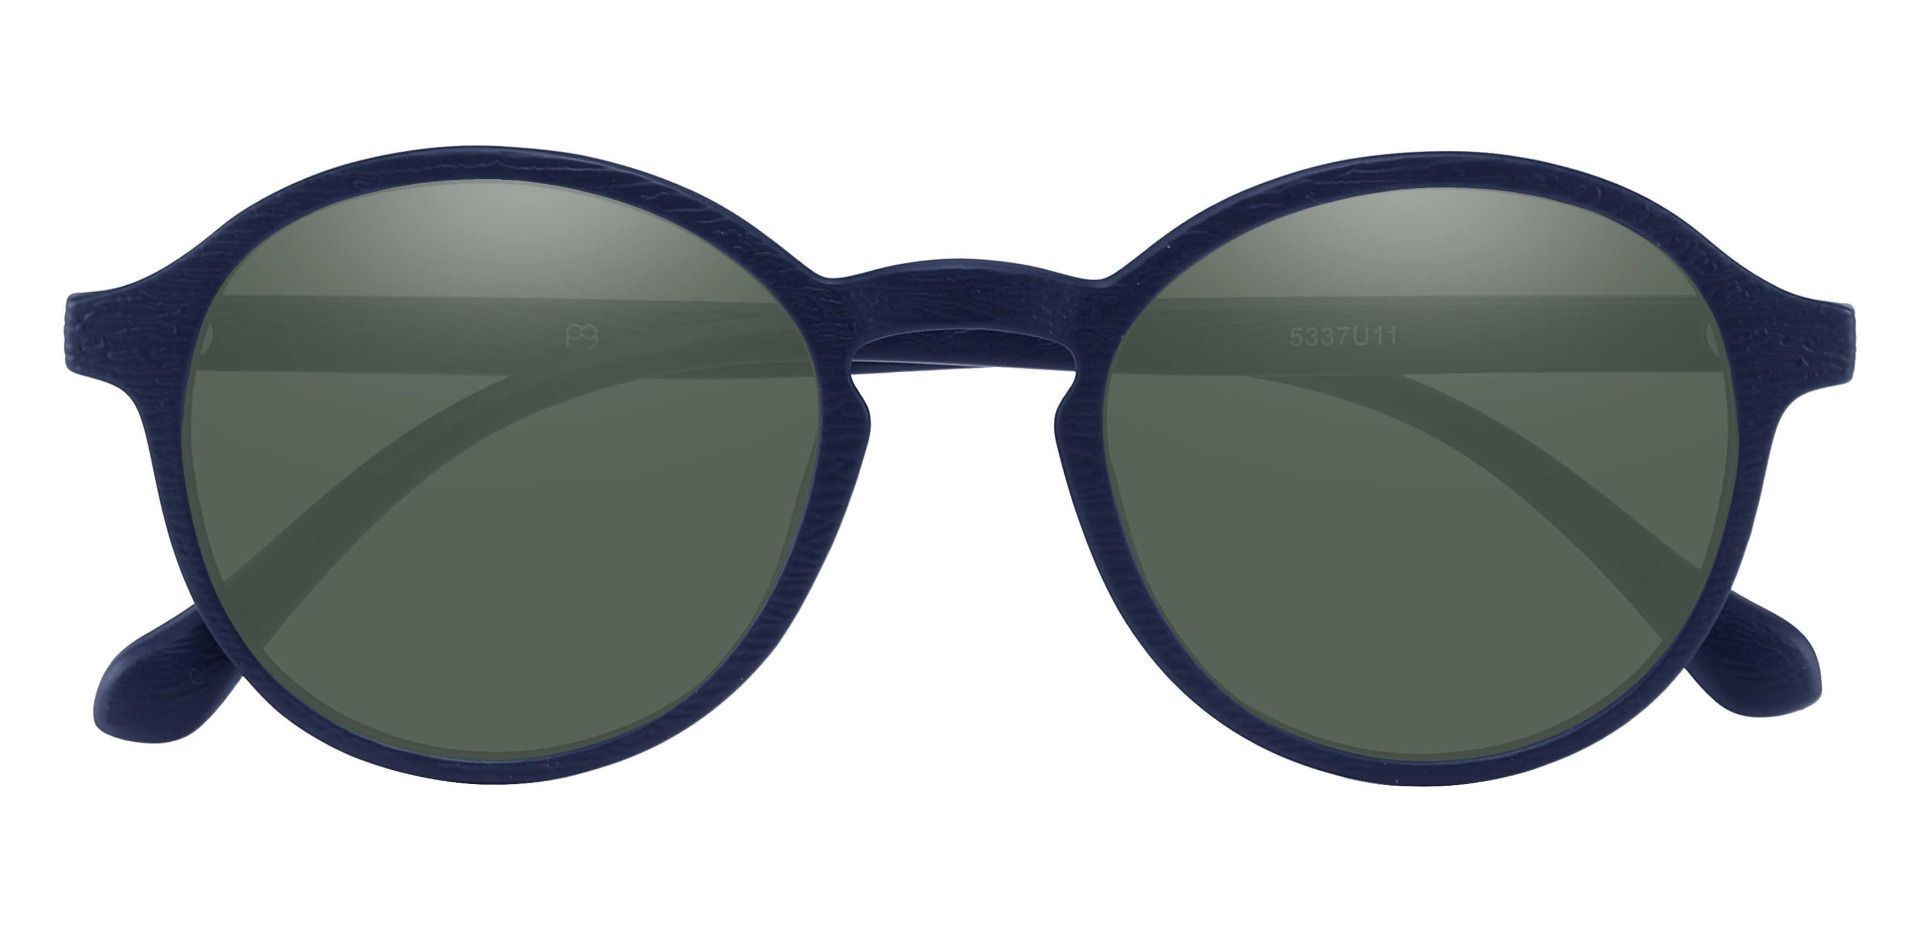 Whitney Round Prescription Sunglasses - Blue Frame With Green Lenses